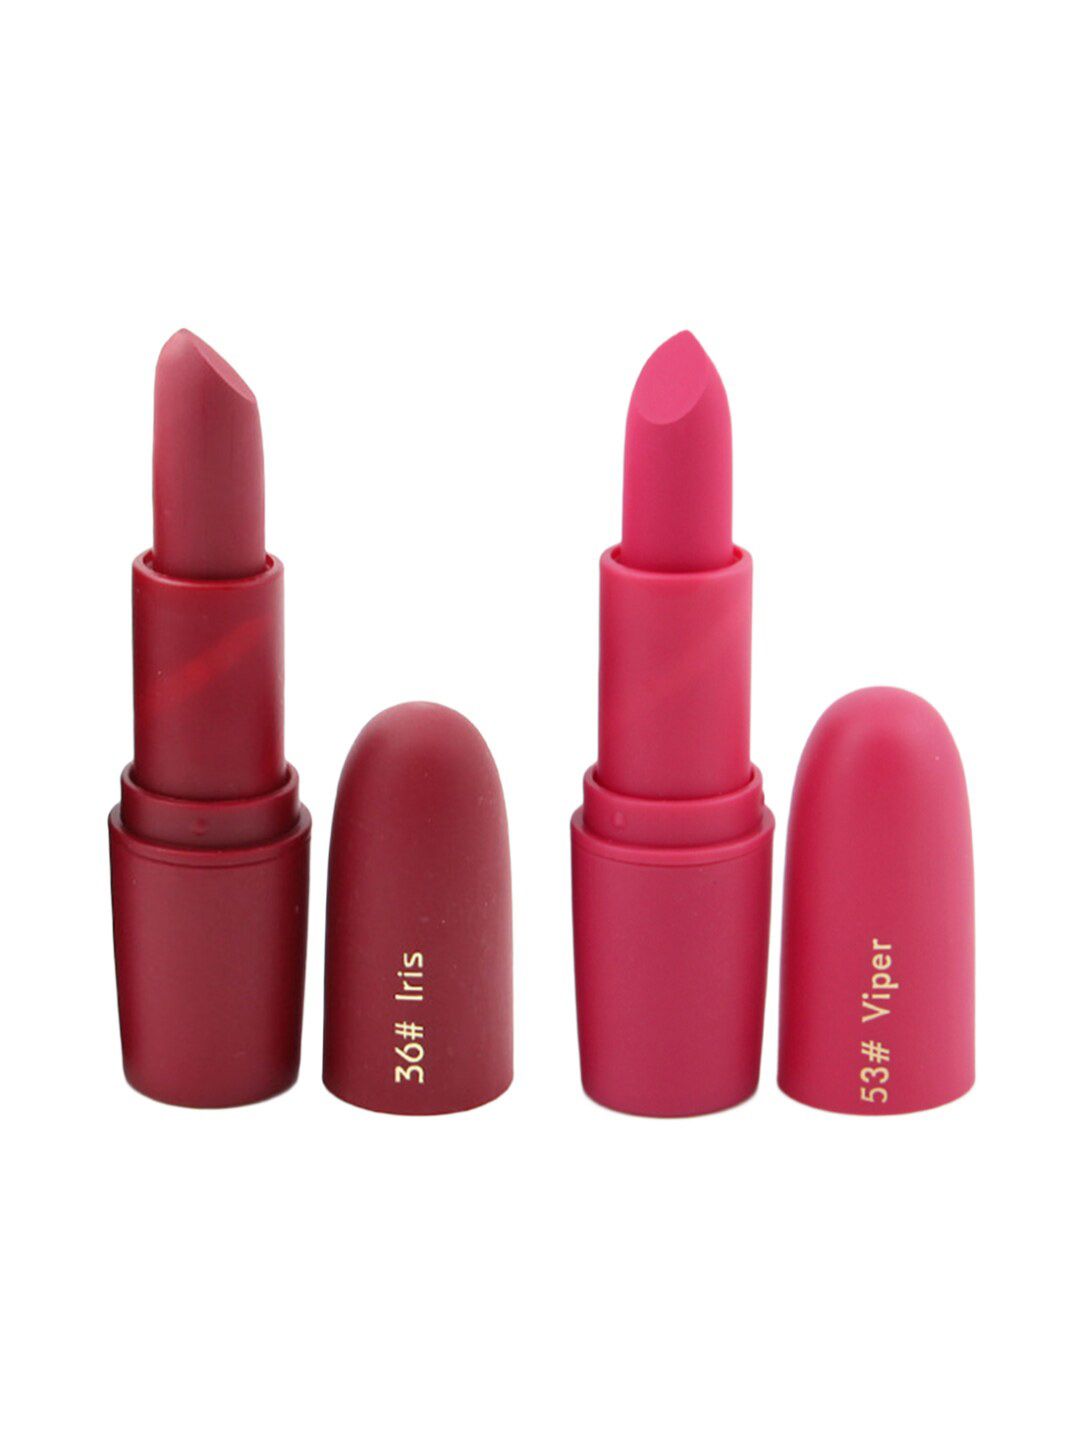 MISS ROSE Professional Make-Up Set of 2 Matte Creamy Lipsticks - Iris 36 & Viper 53 Price in India